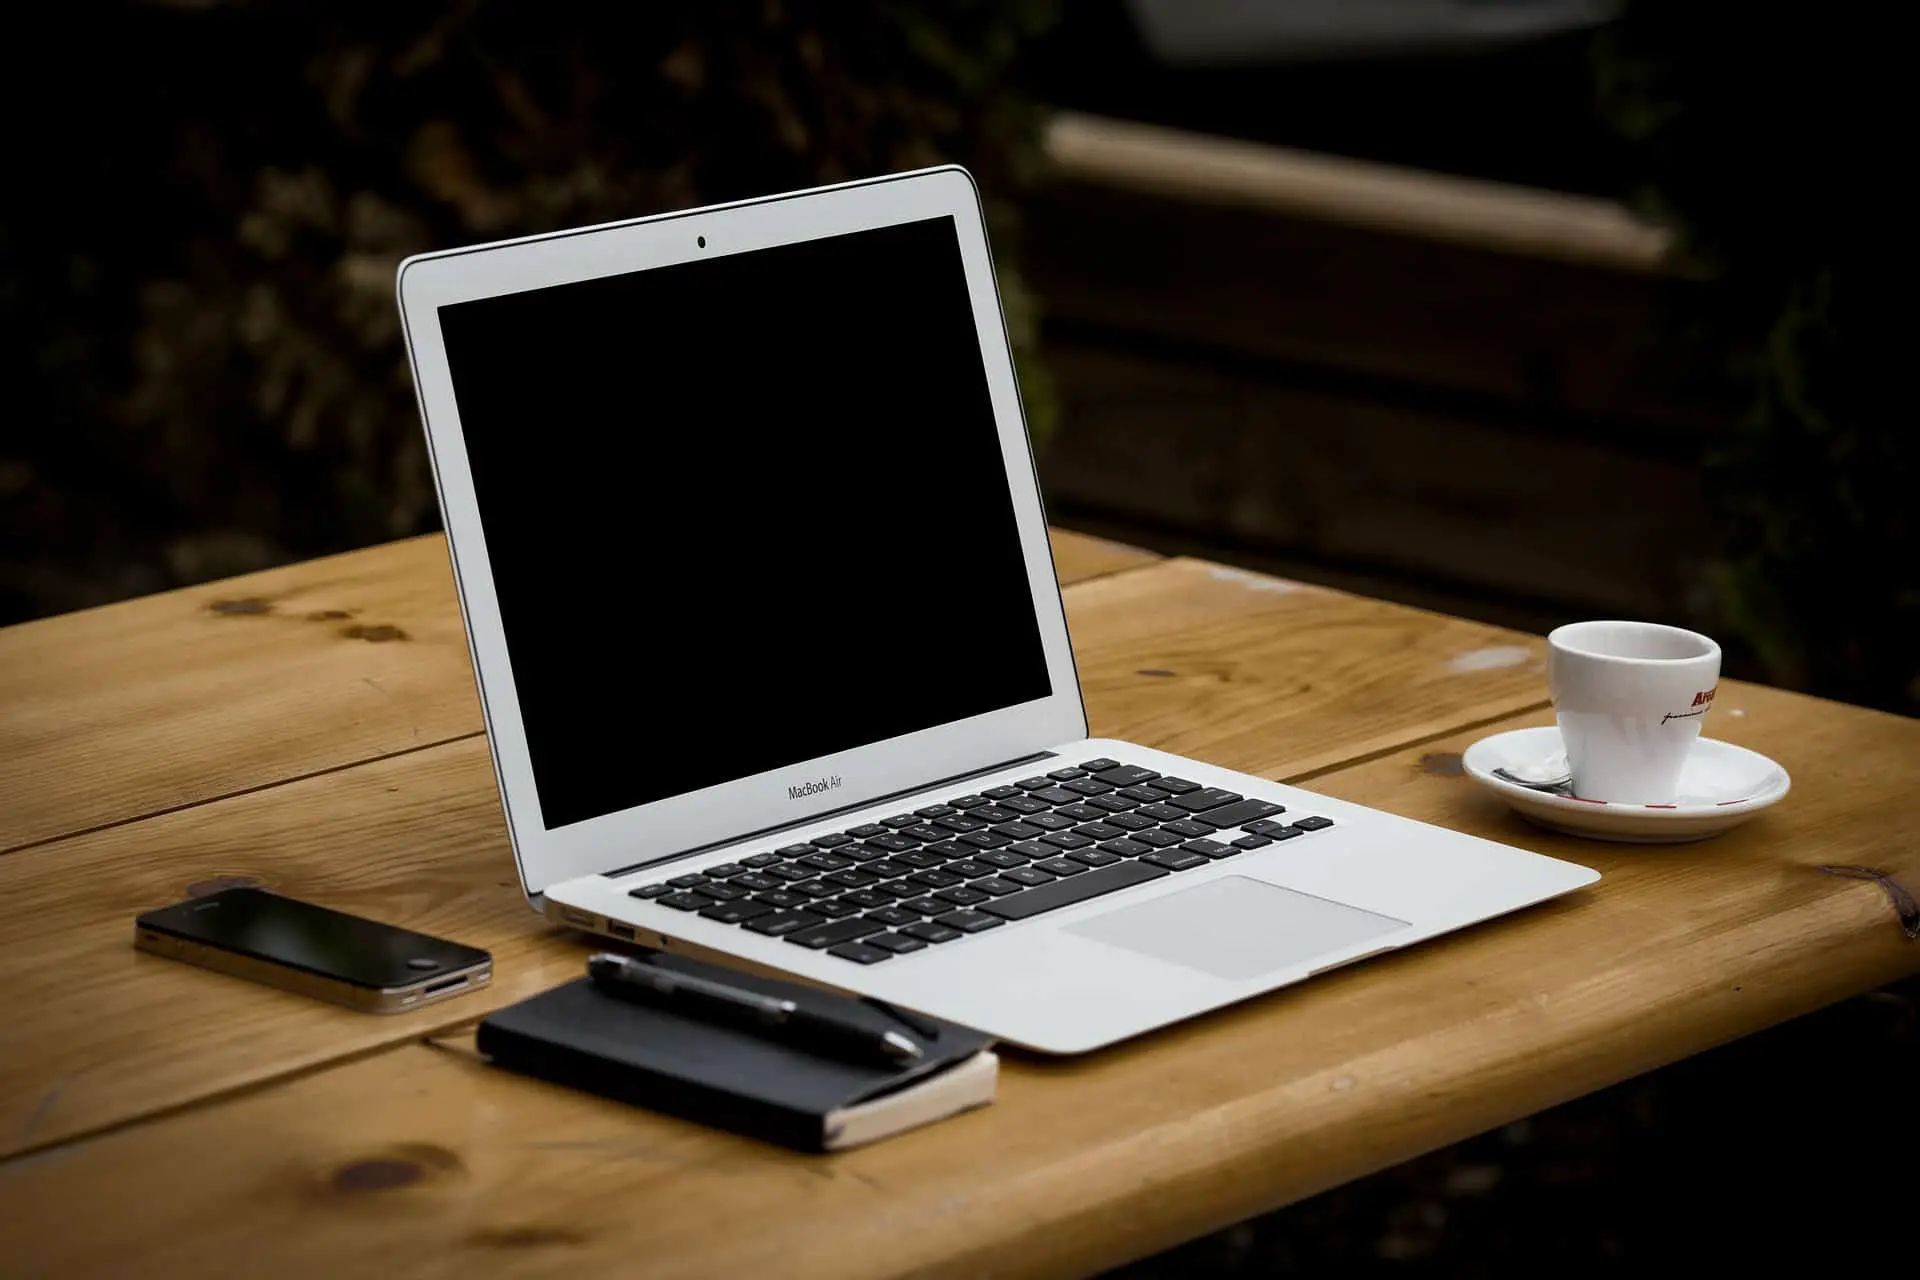 Macbook Pro on a wood desk